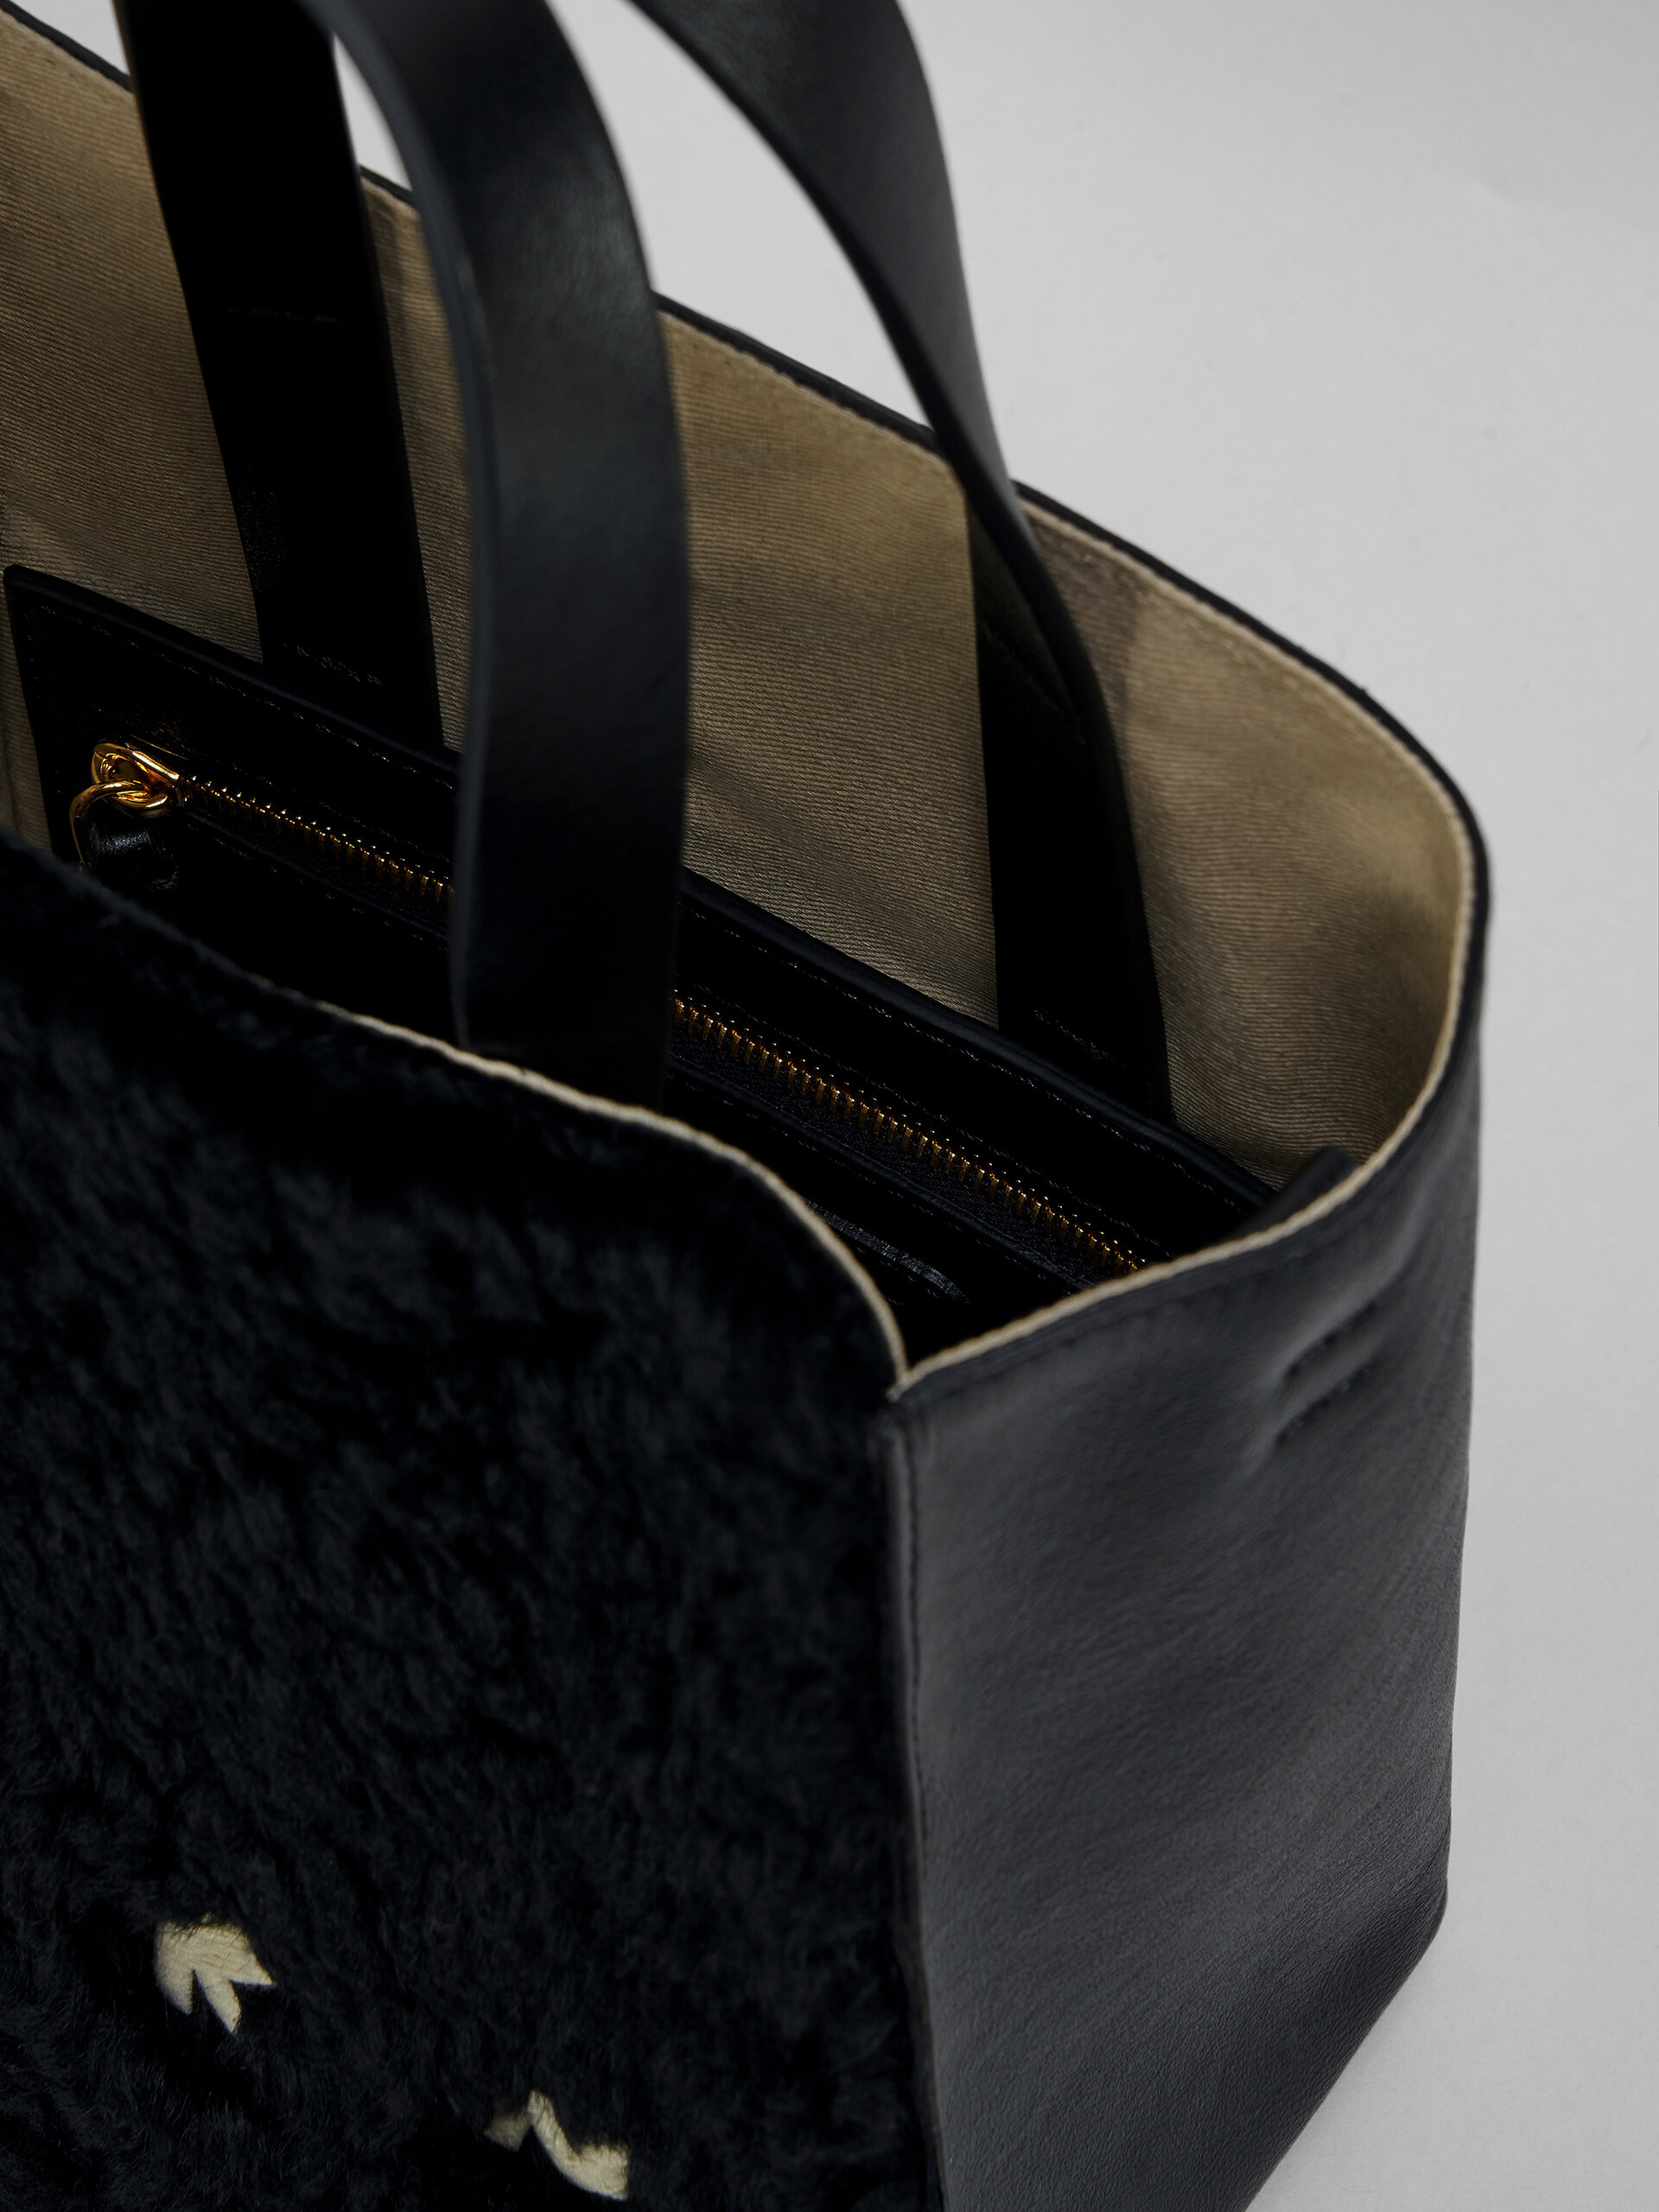 MUSEO SOFT mini bag in black shearling - Shopping Bags - Image 4